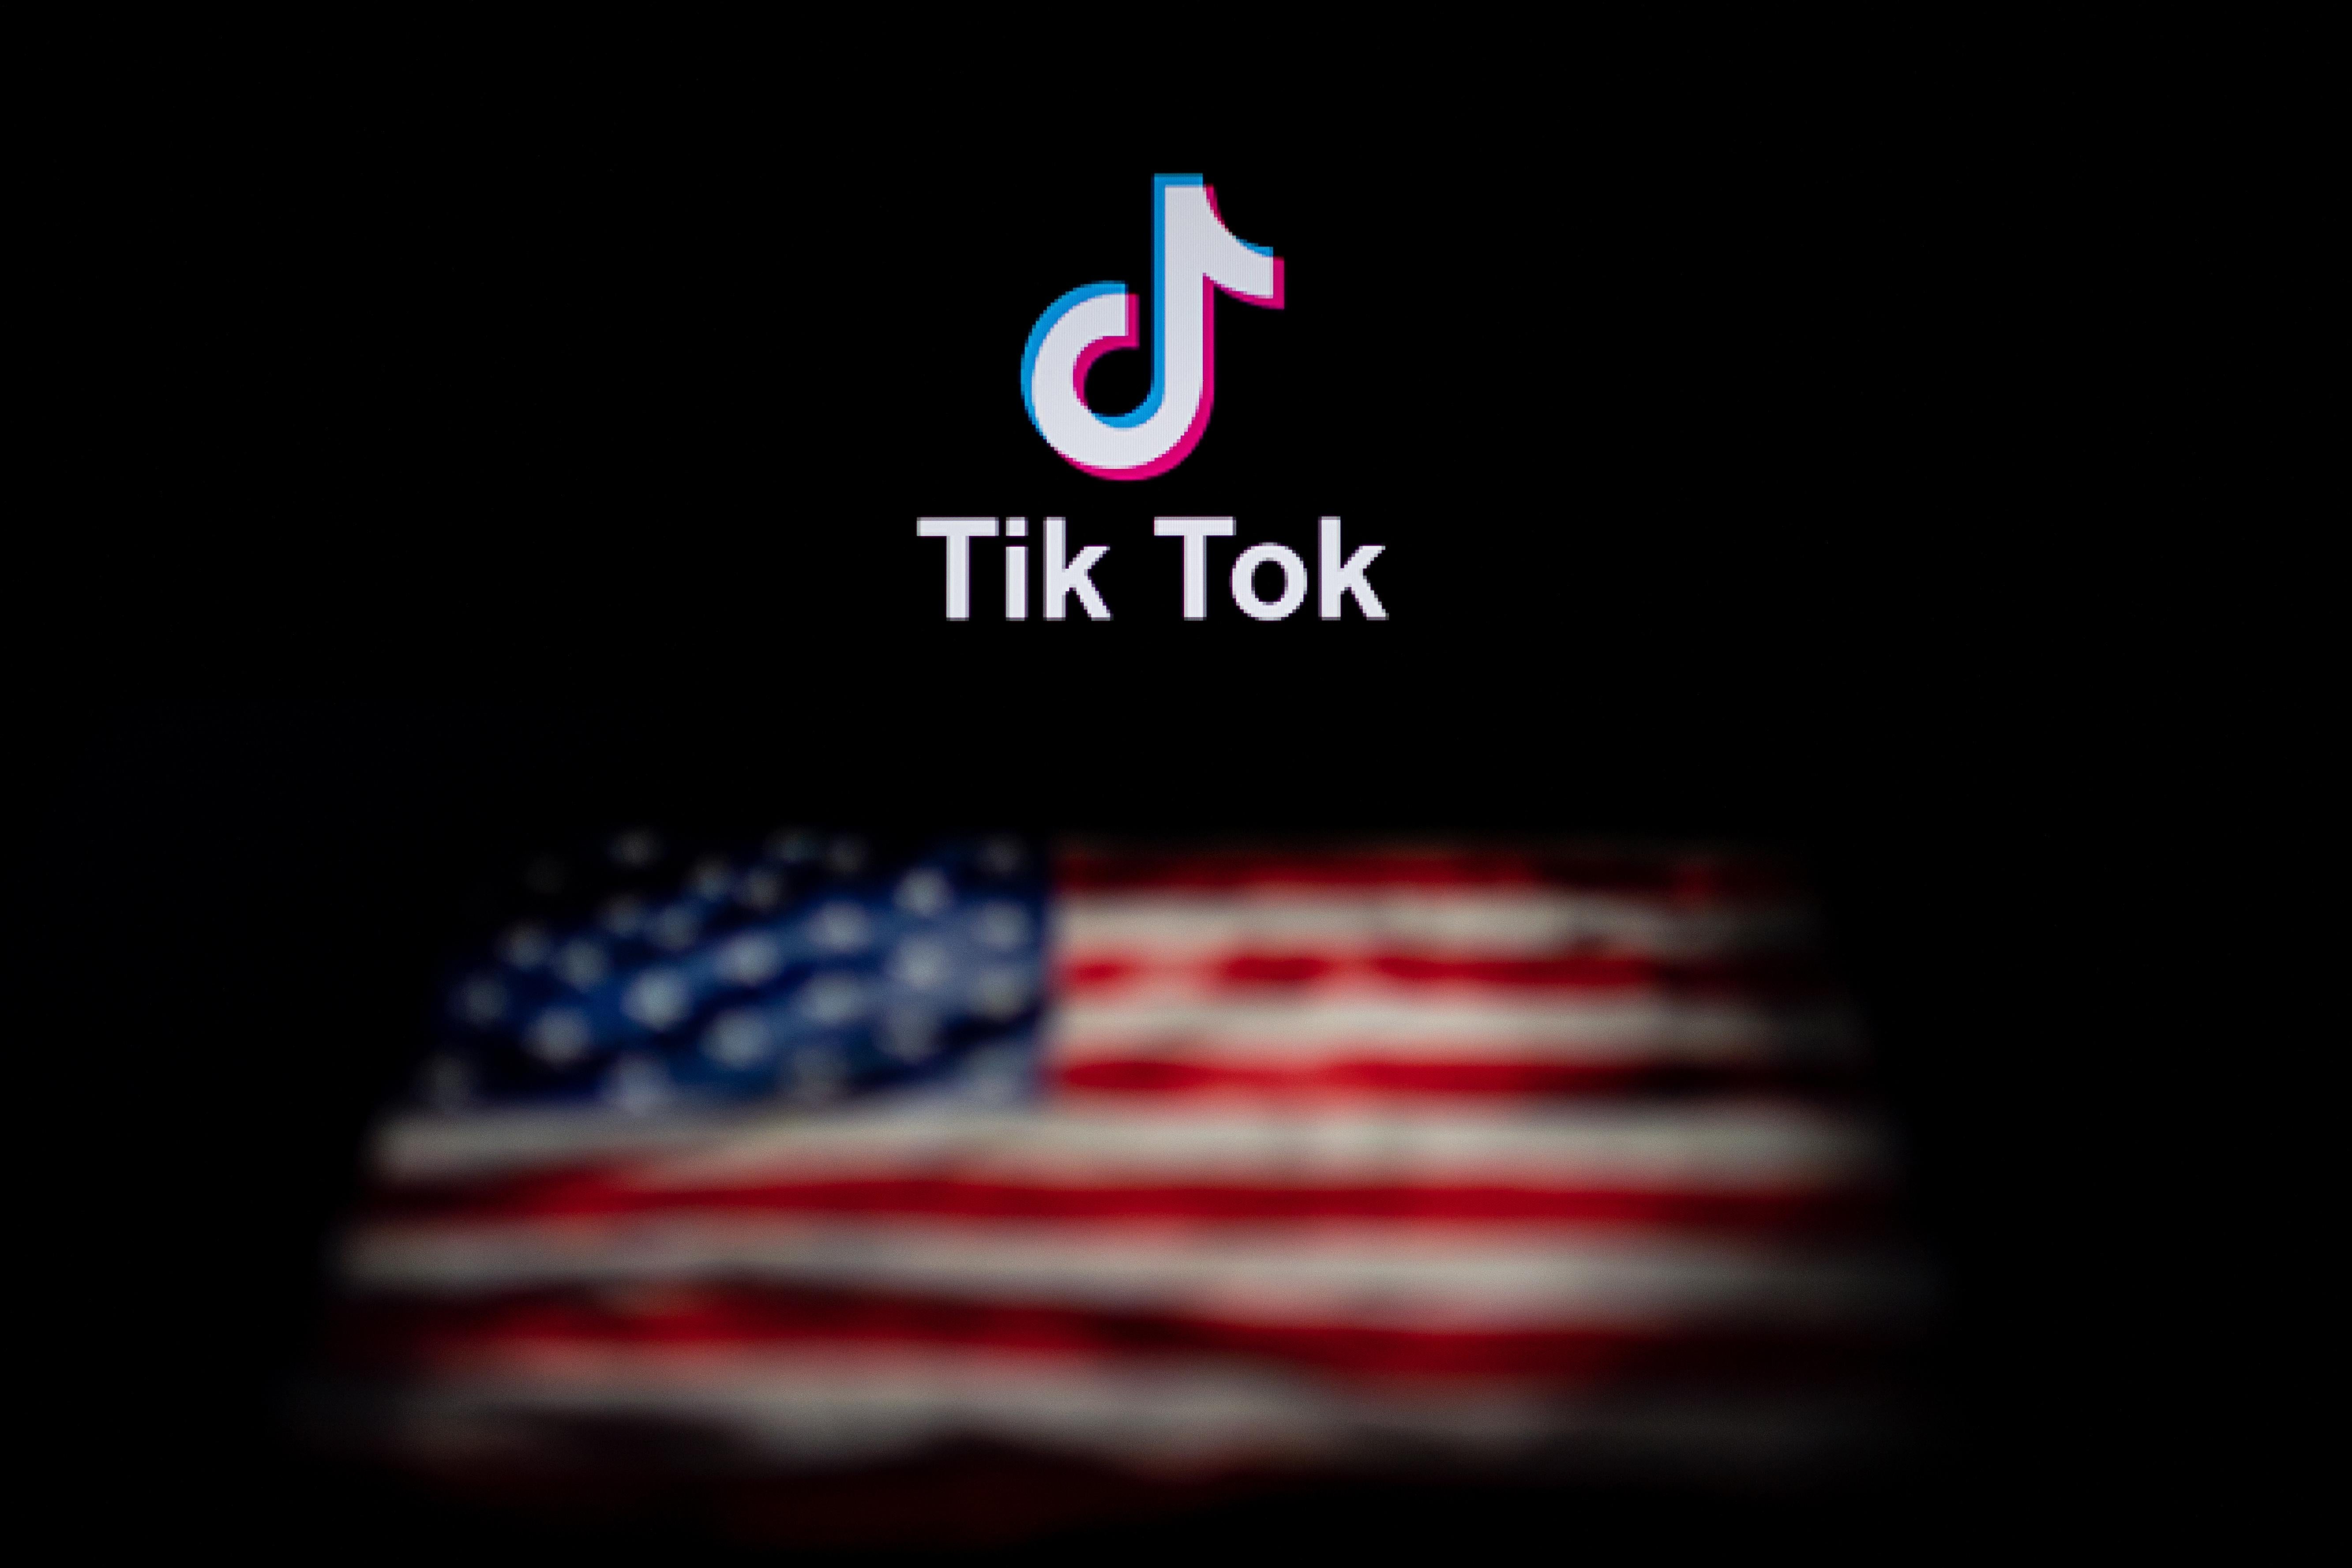 The TikTok logo and an American flag.